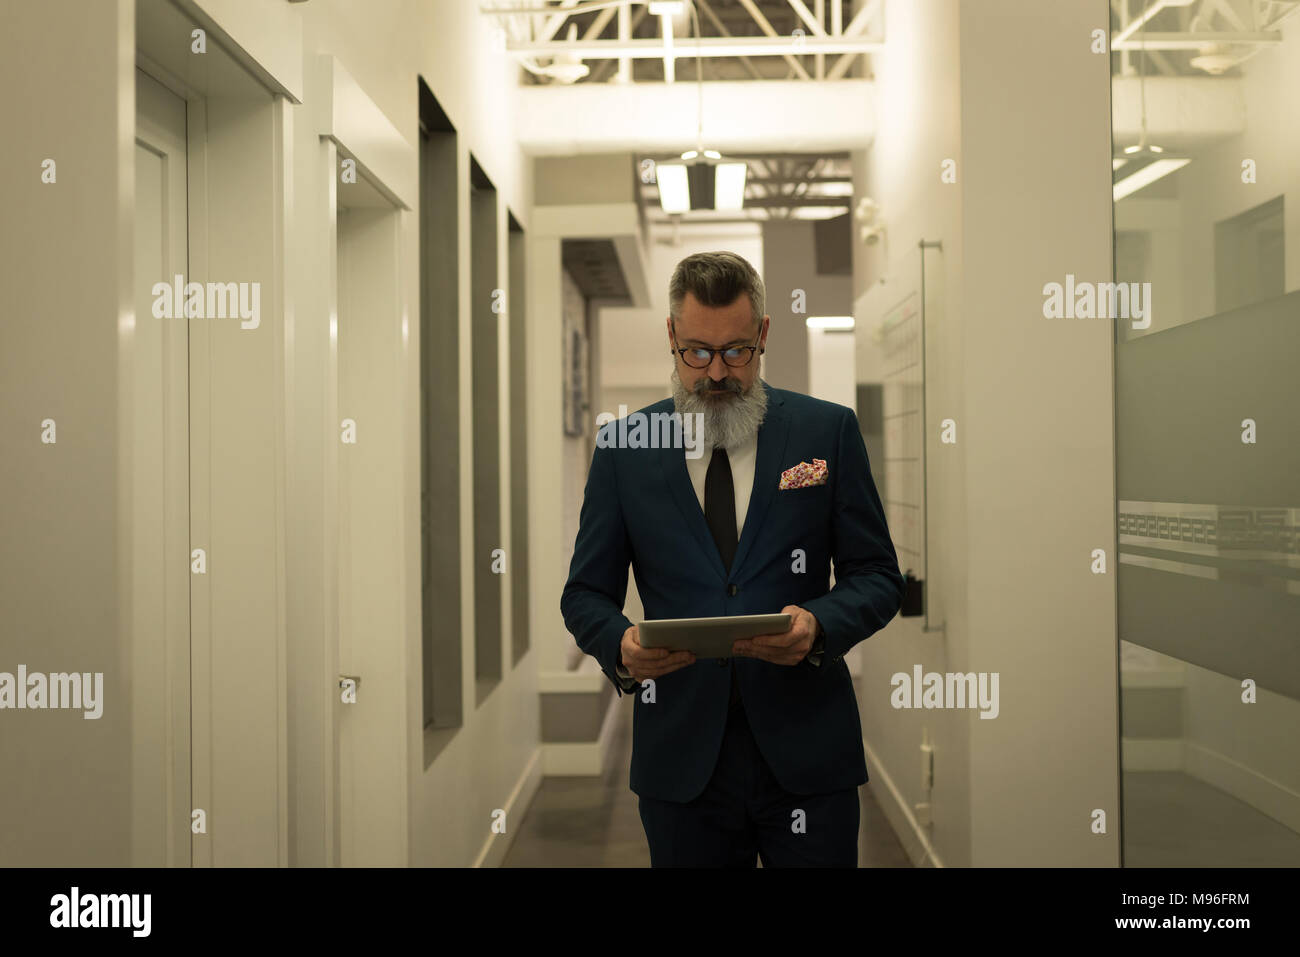 Business executive using digital tablet Stock Photo